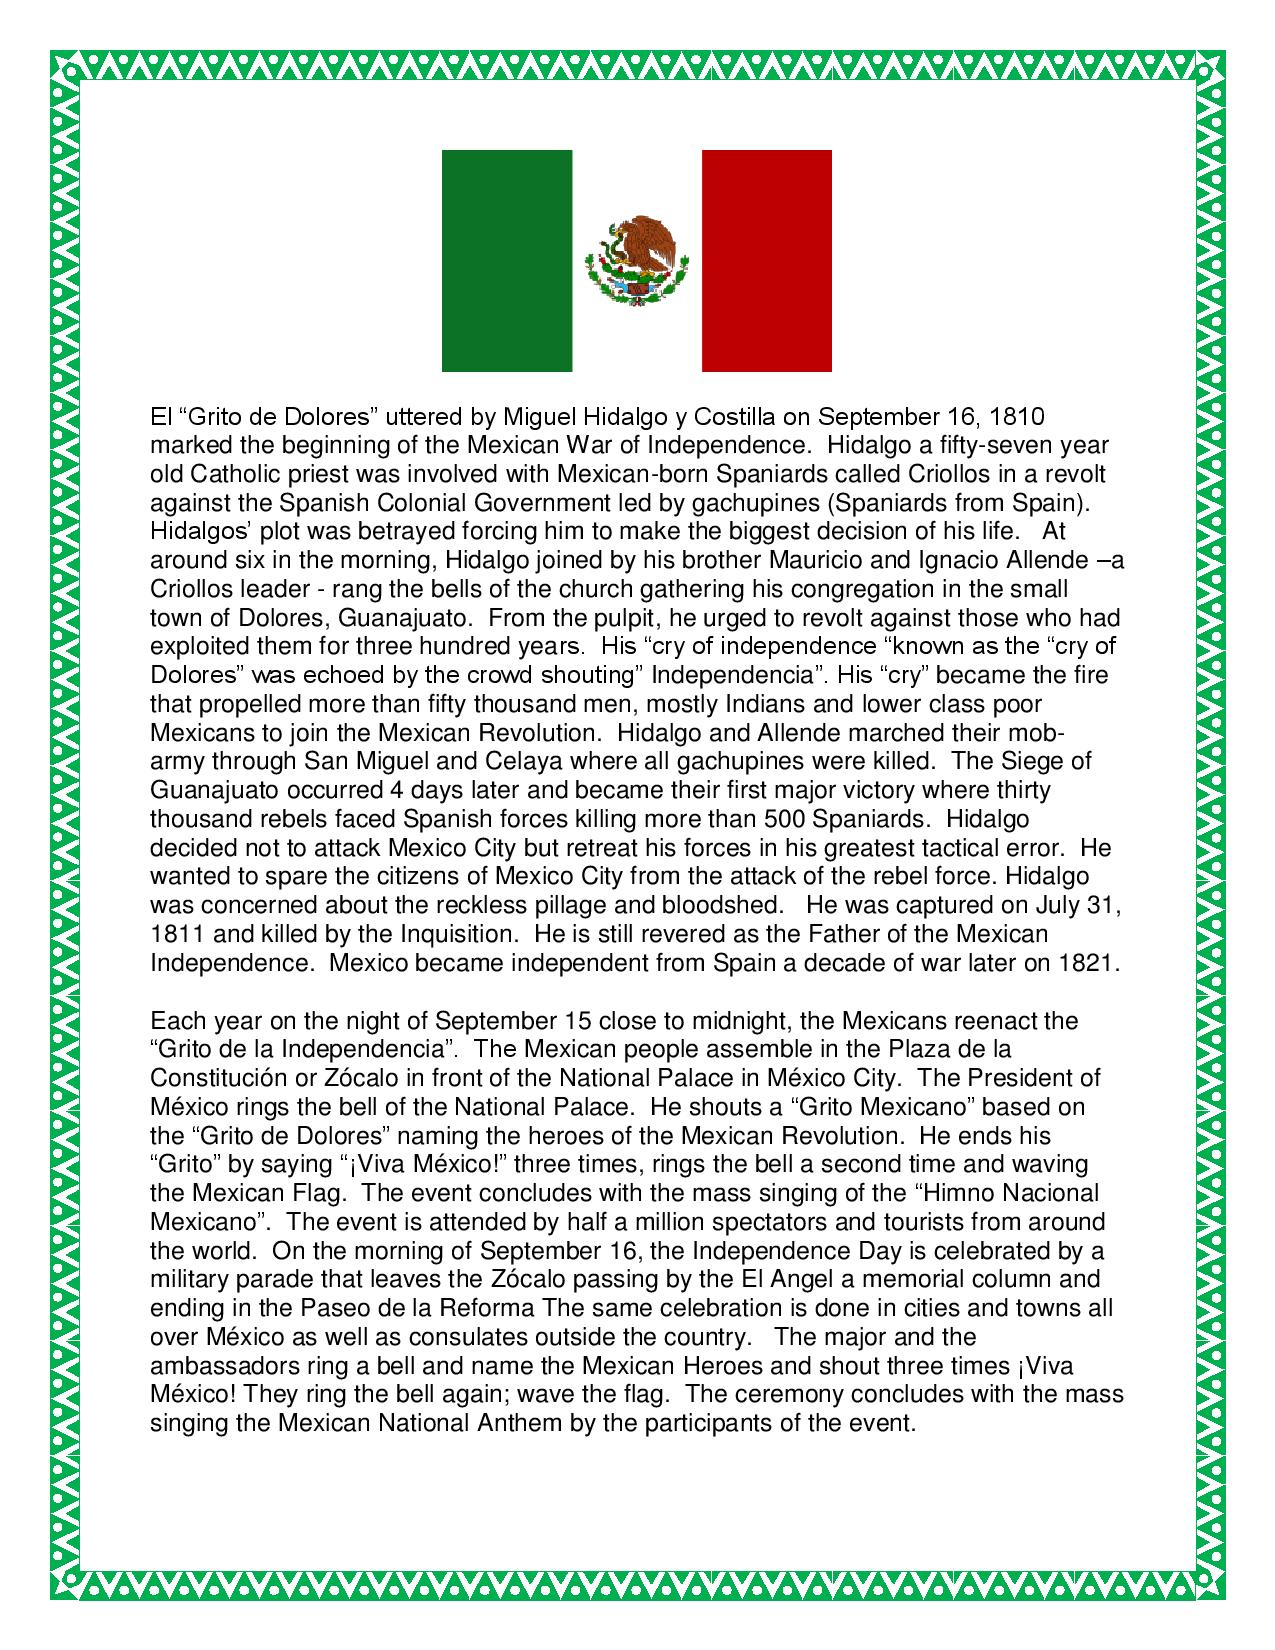 Mexican revolution essay